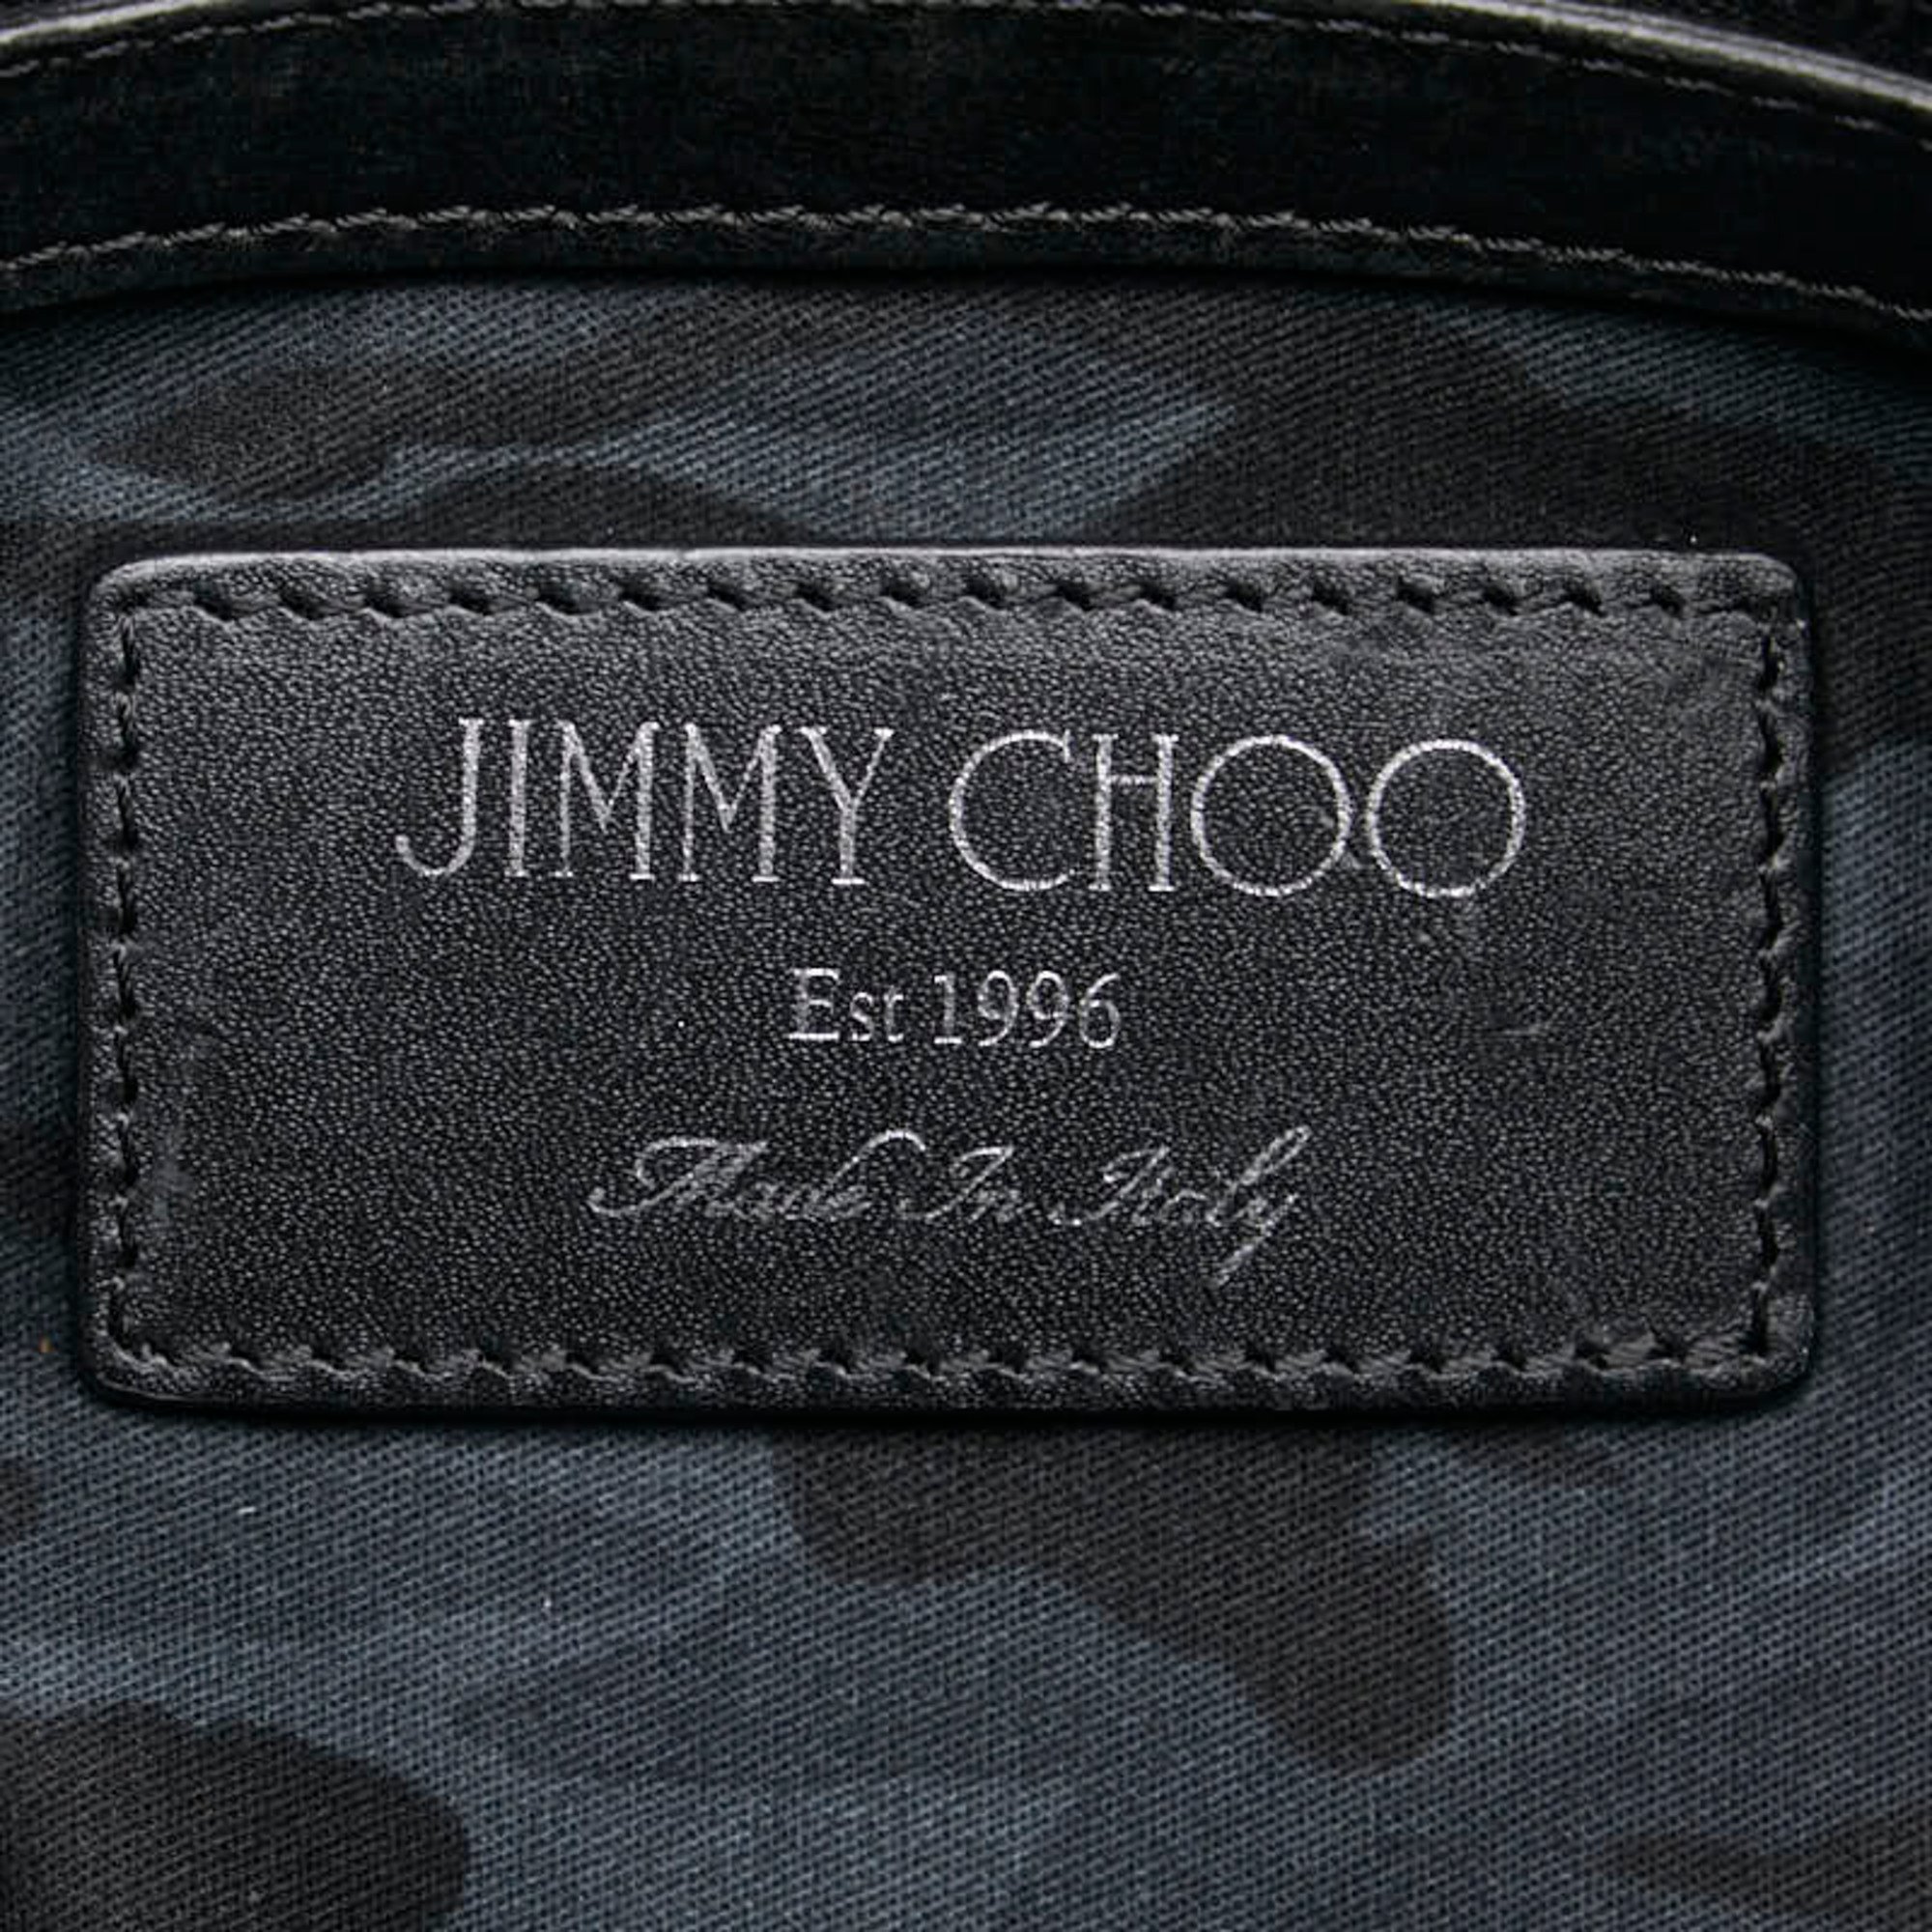 Jimmy Choo Star Studs Clutch Bag Black Leather Women's JIMMY CHOO